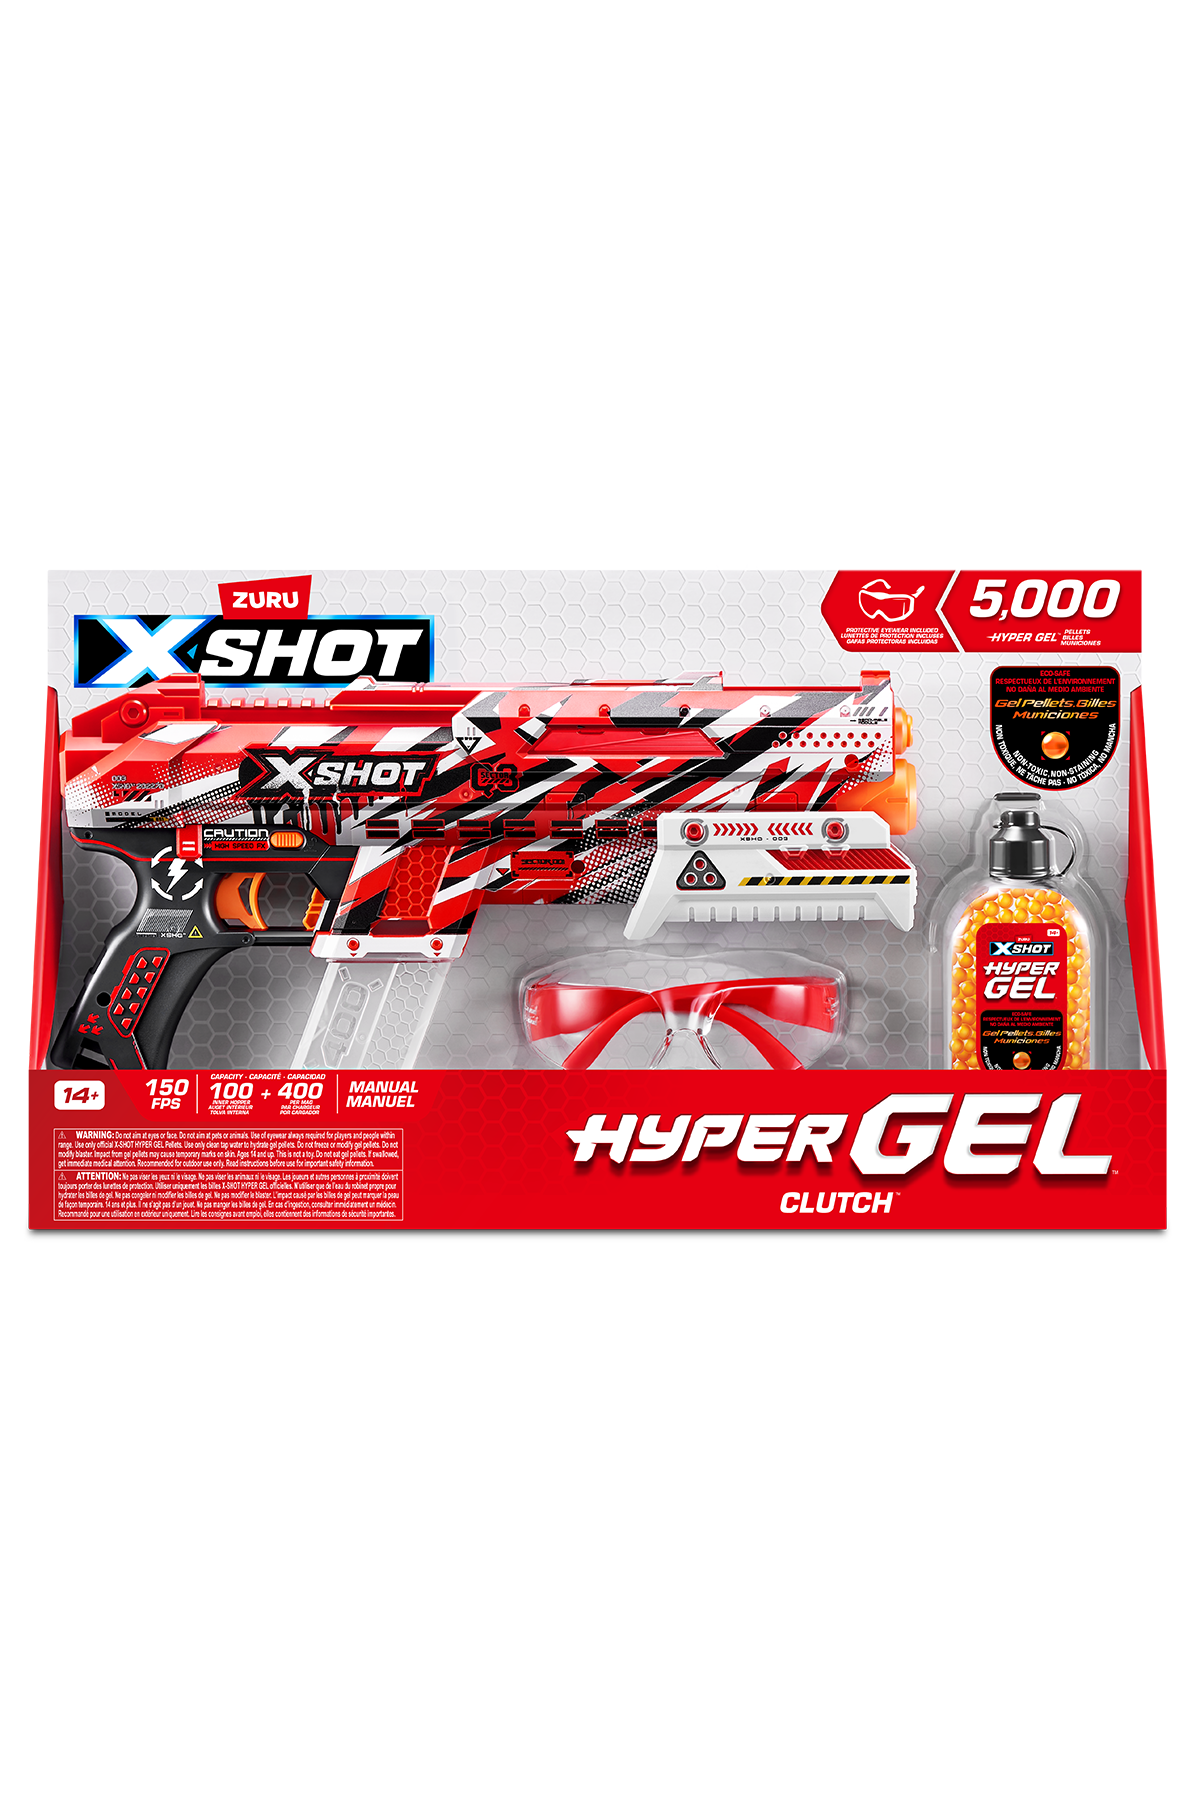 ZURU X-Shot Hyper Gel Clutch Blaster